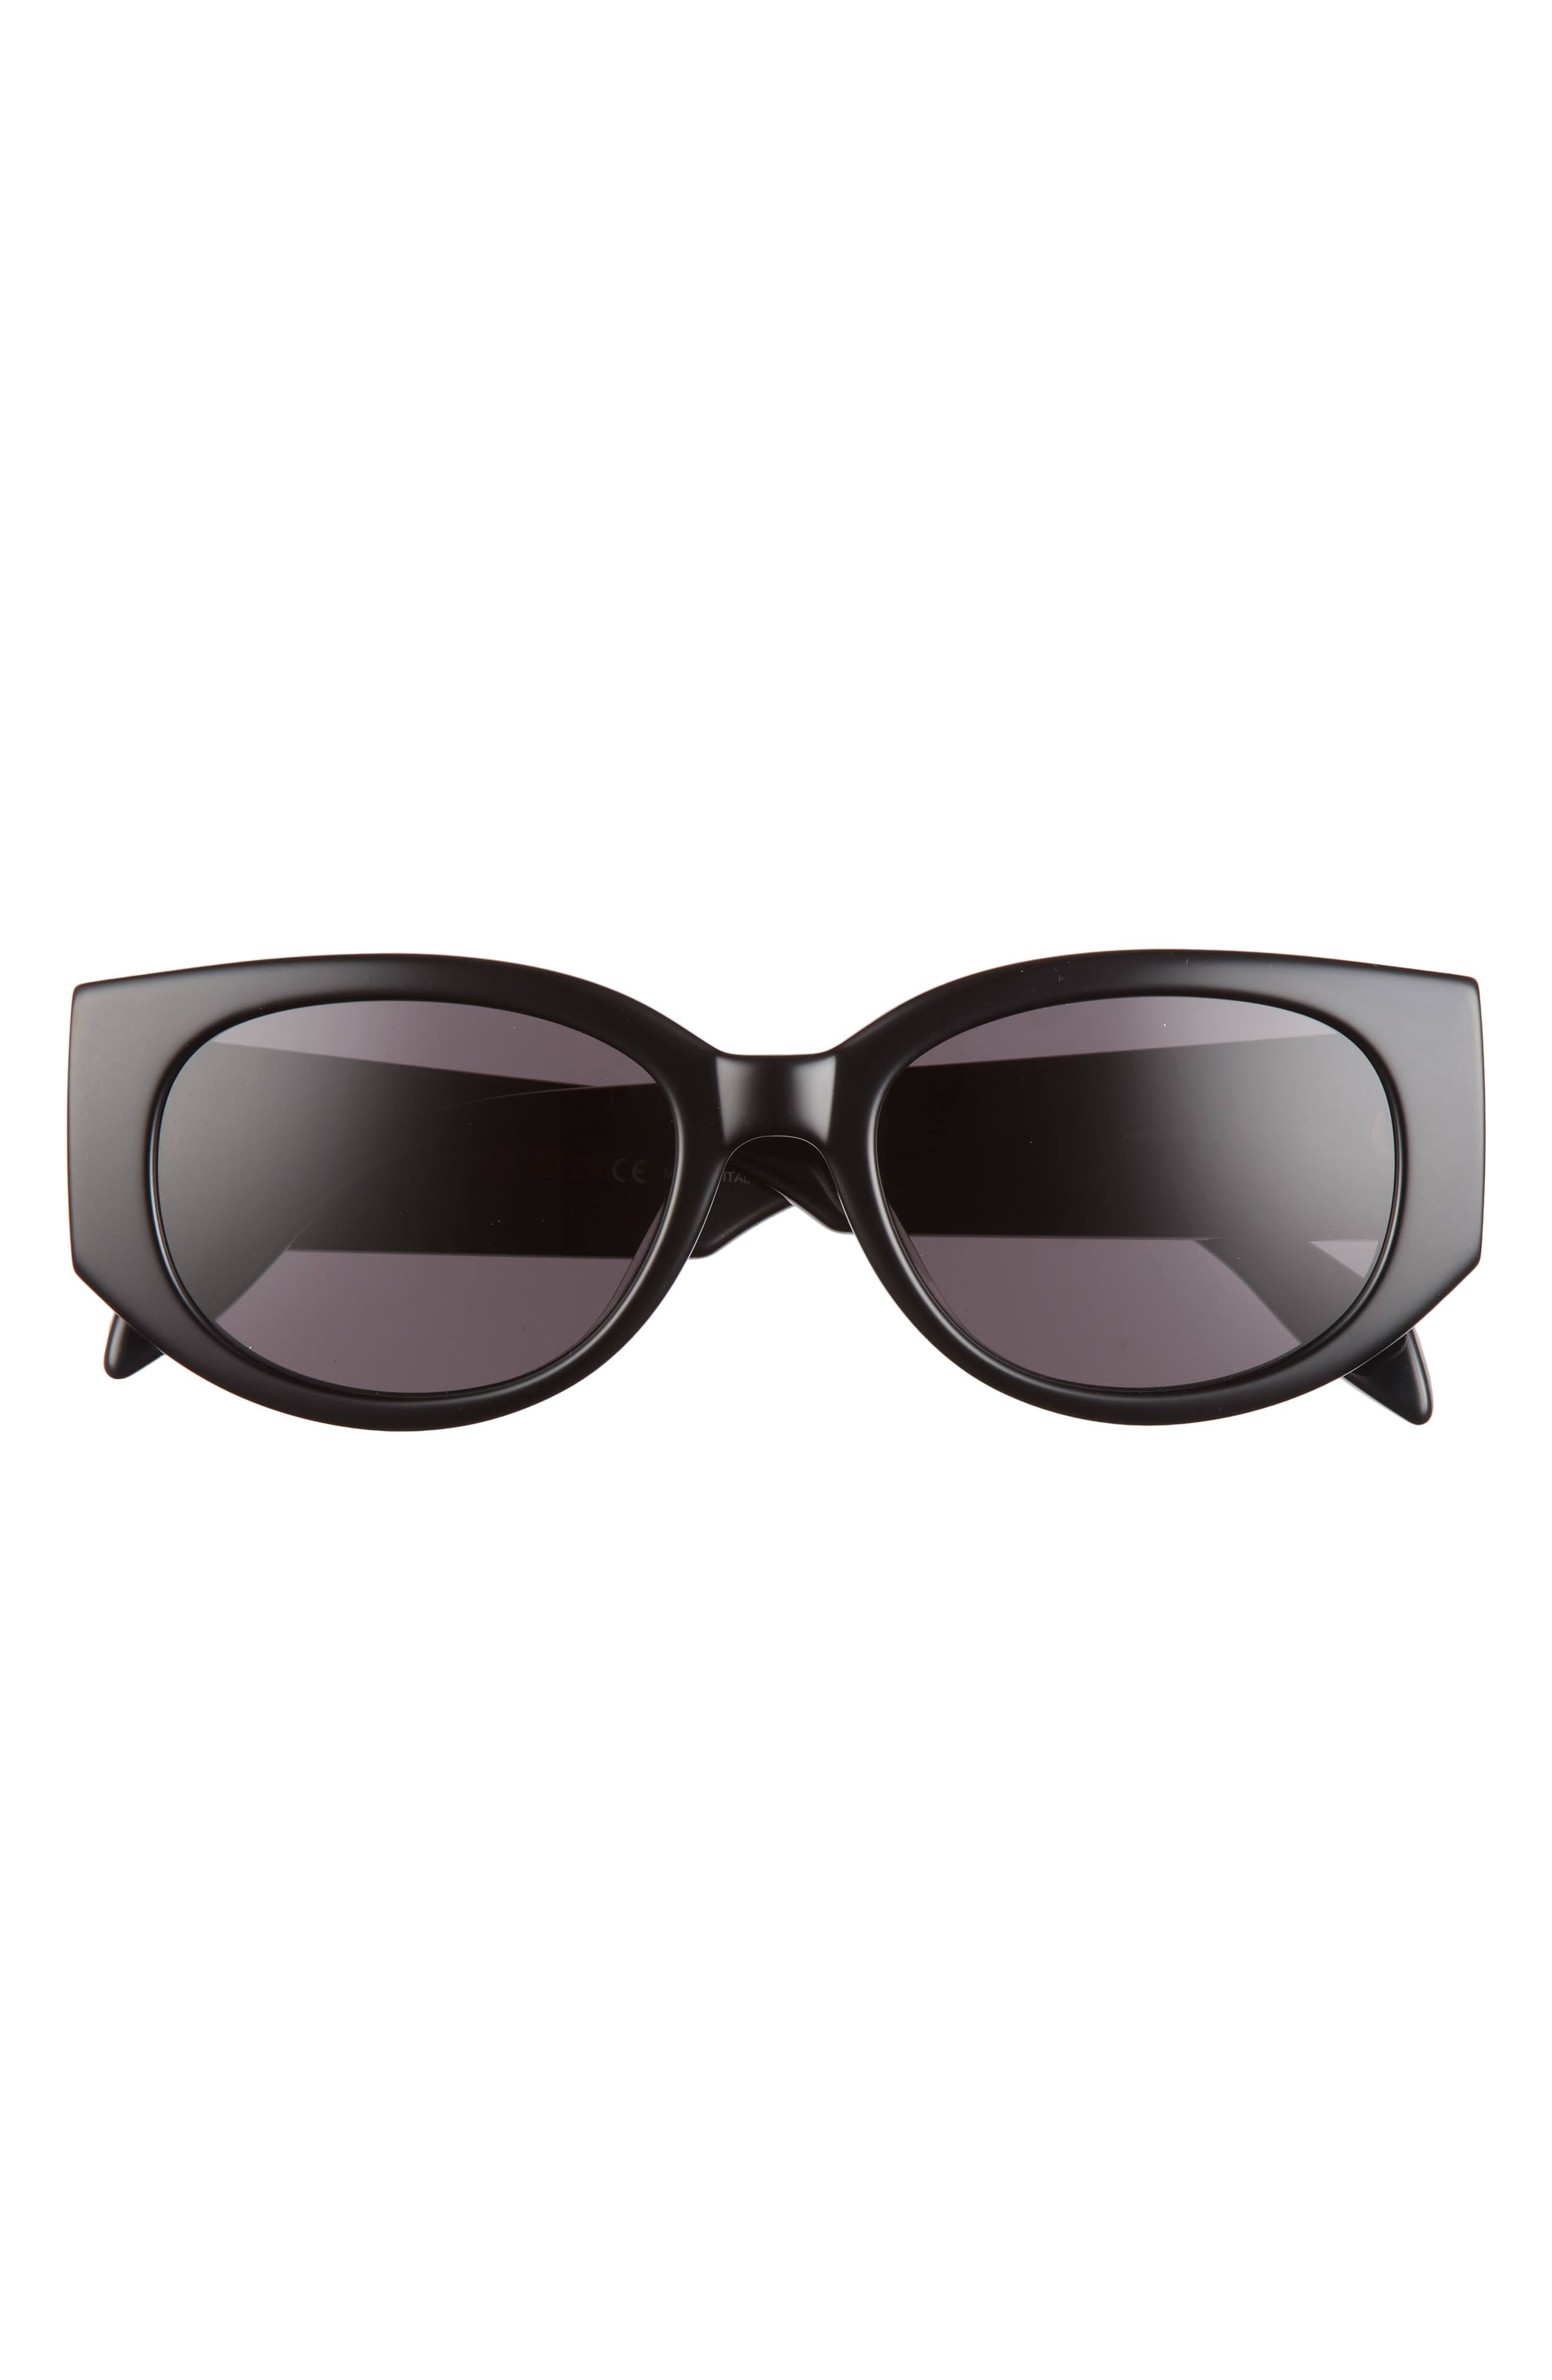 Alexander McQueen 54mm Rectangular Sunglasses in Black/Red at Nordstrom